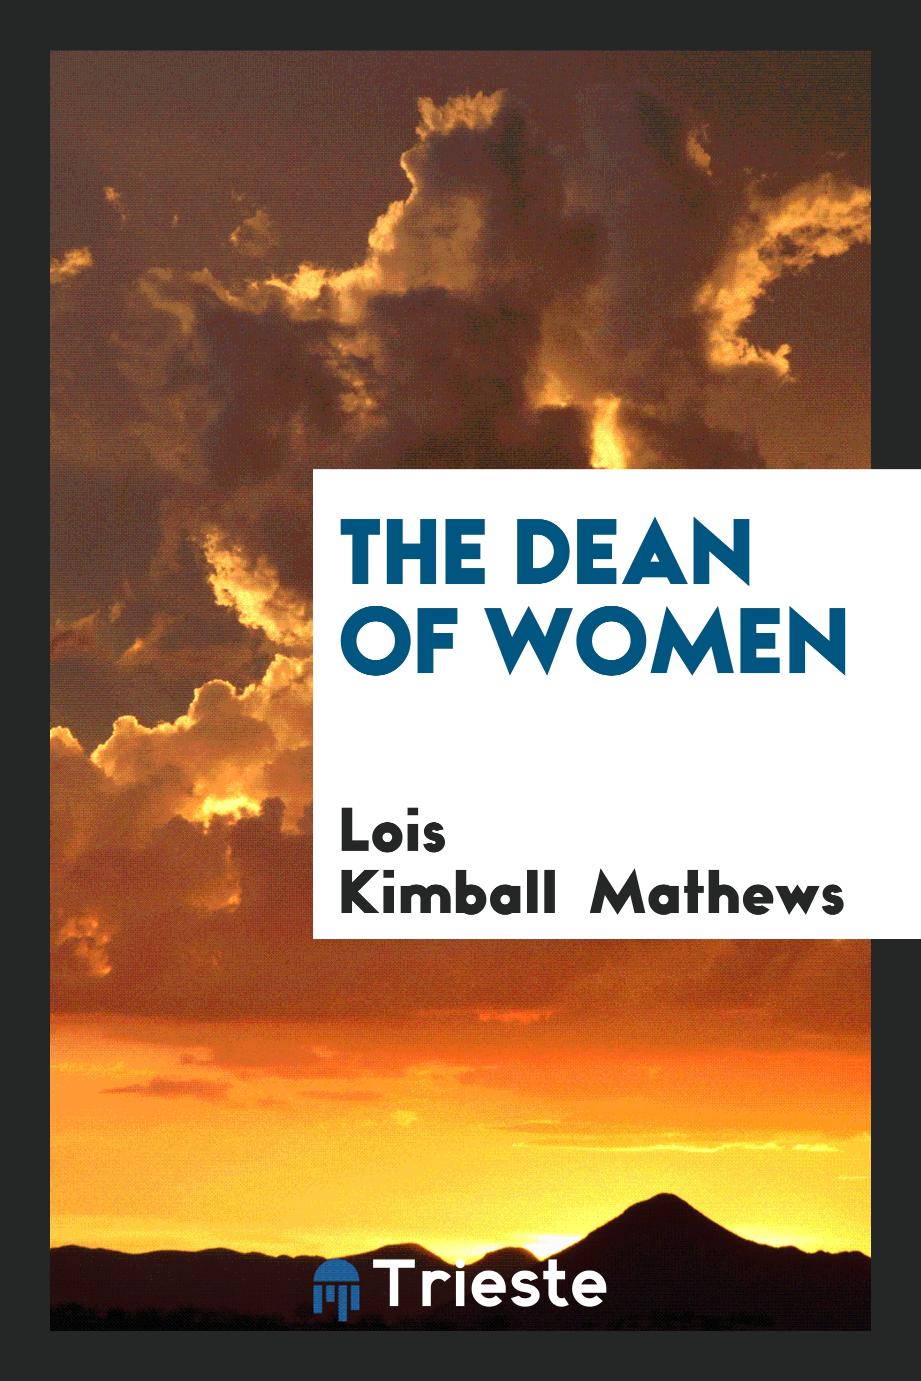 The dean of women